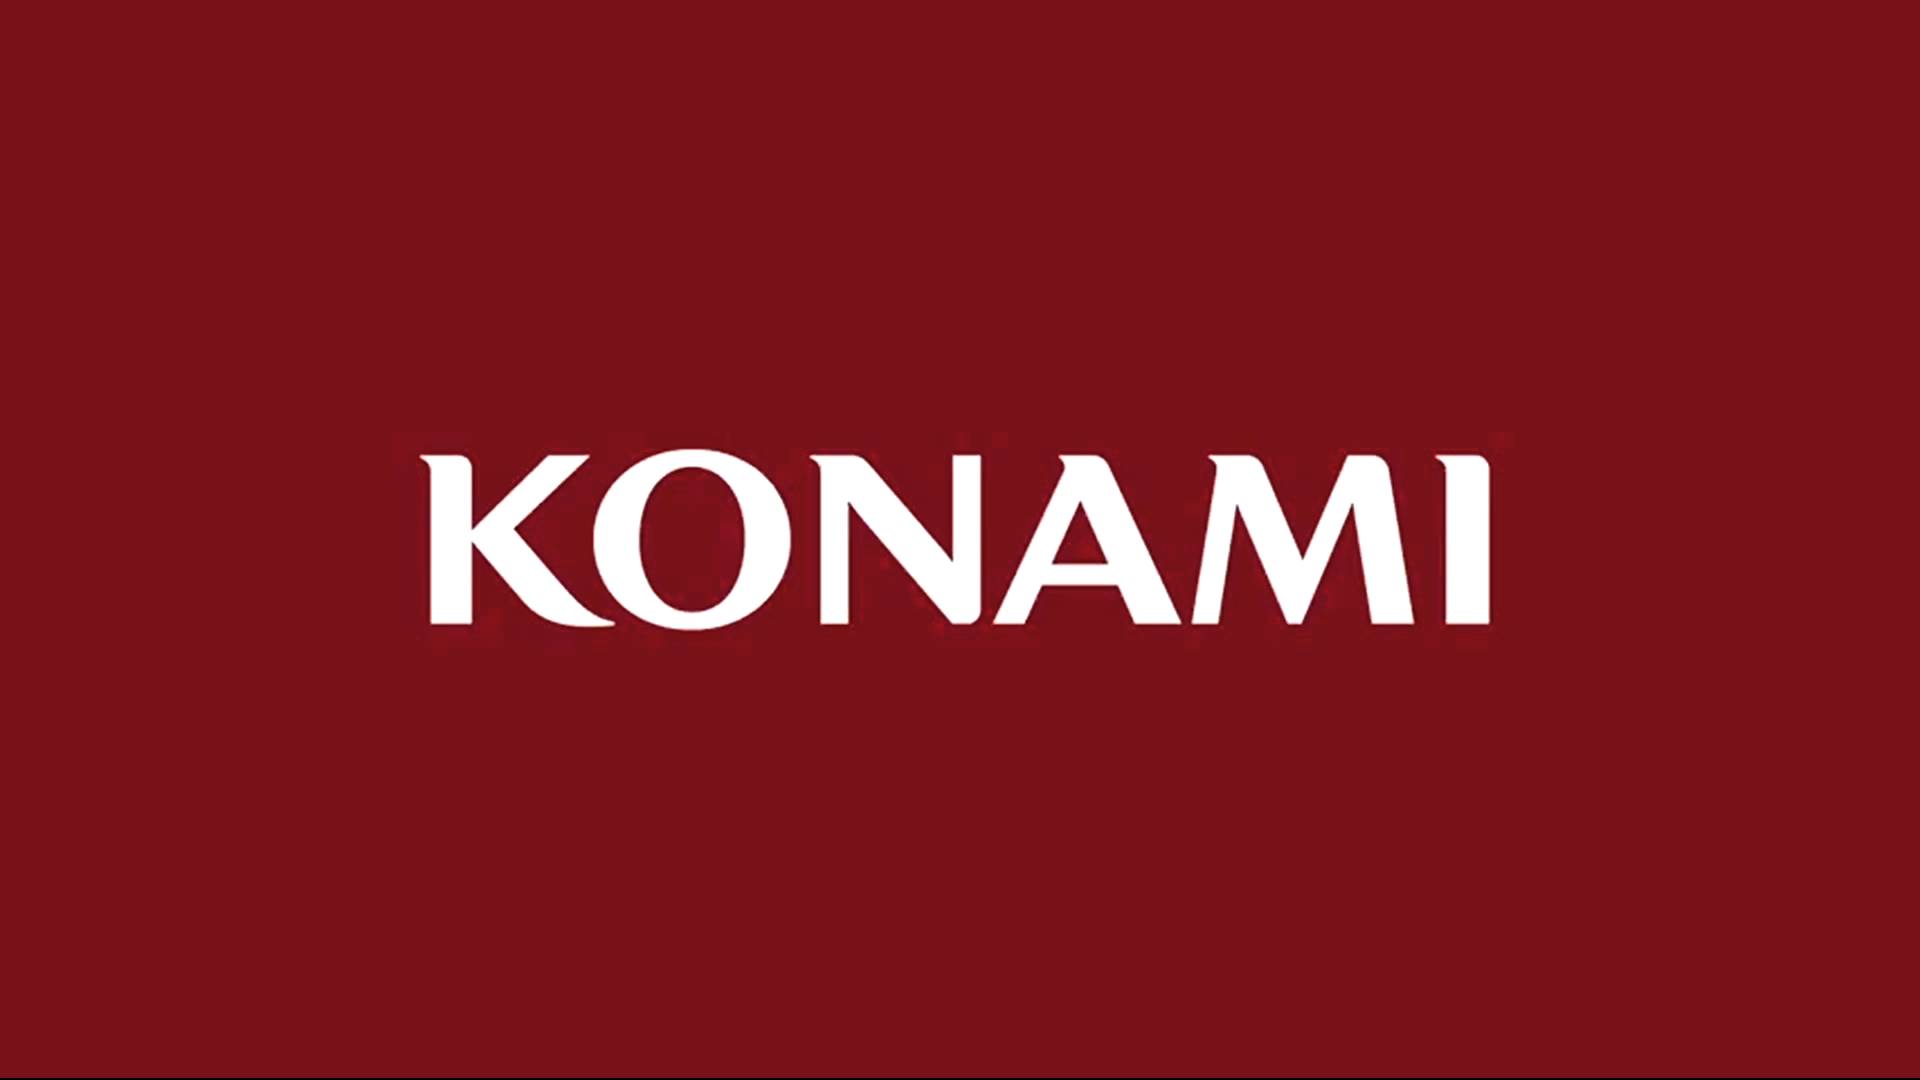 Newspaper Nikkei Reports on Konami’s Employee Treatment - It Doesn't Look Good